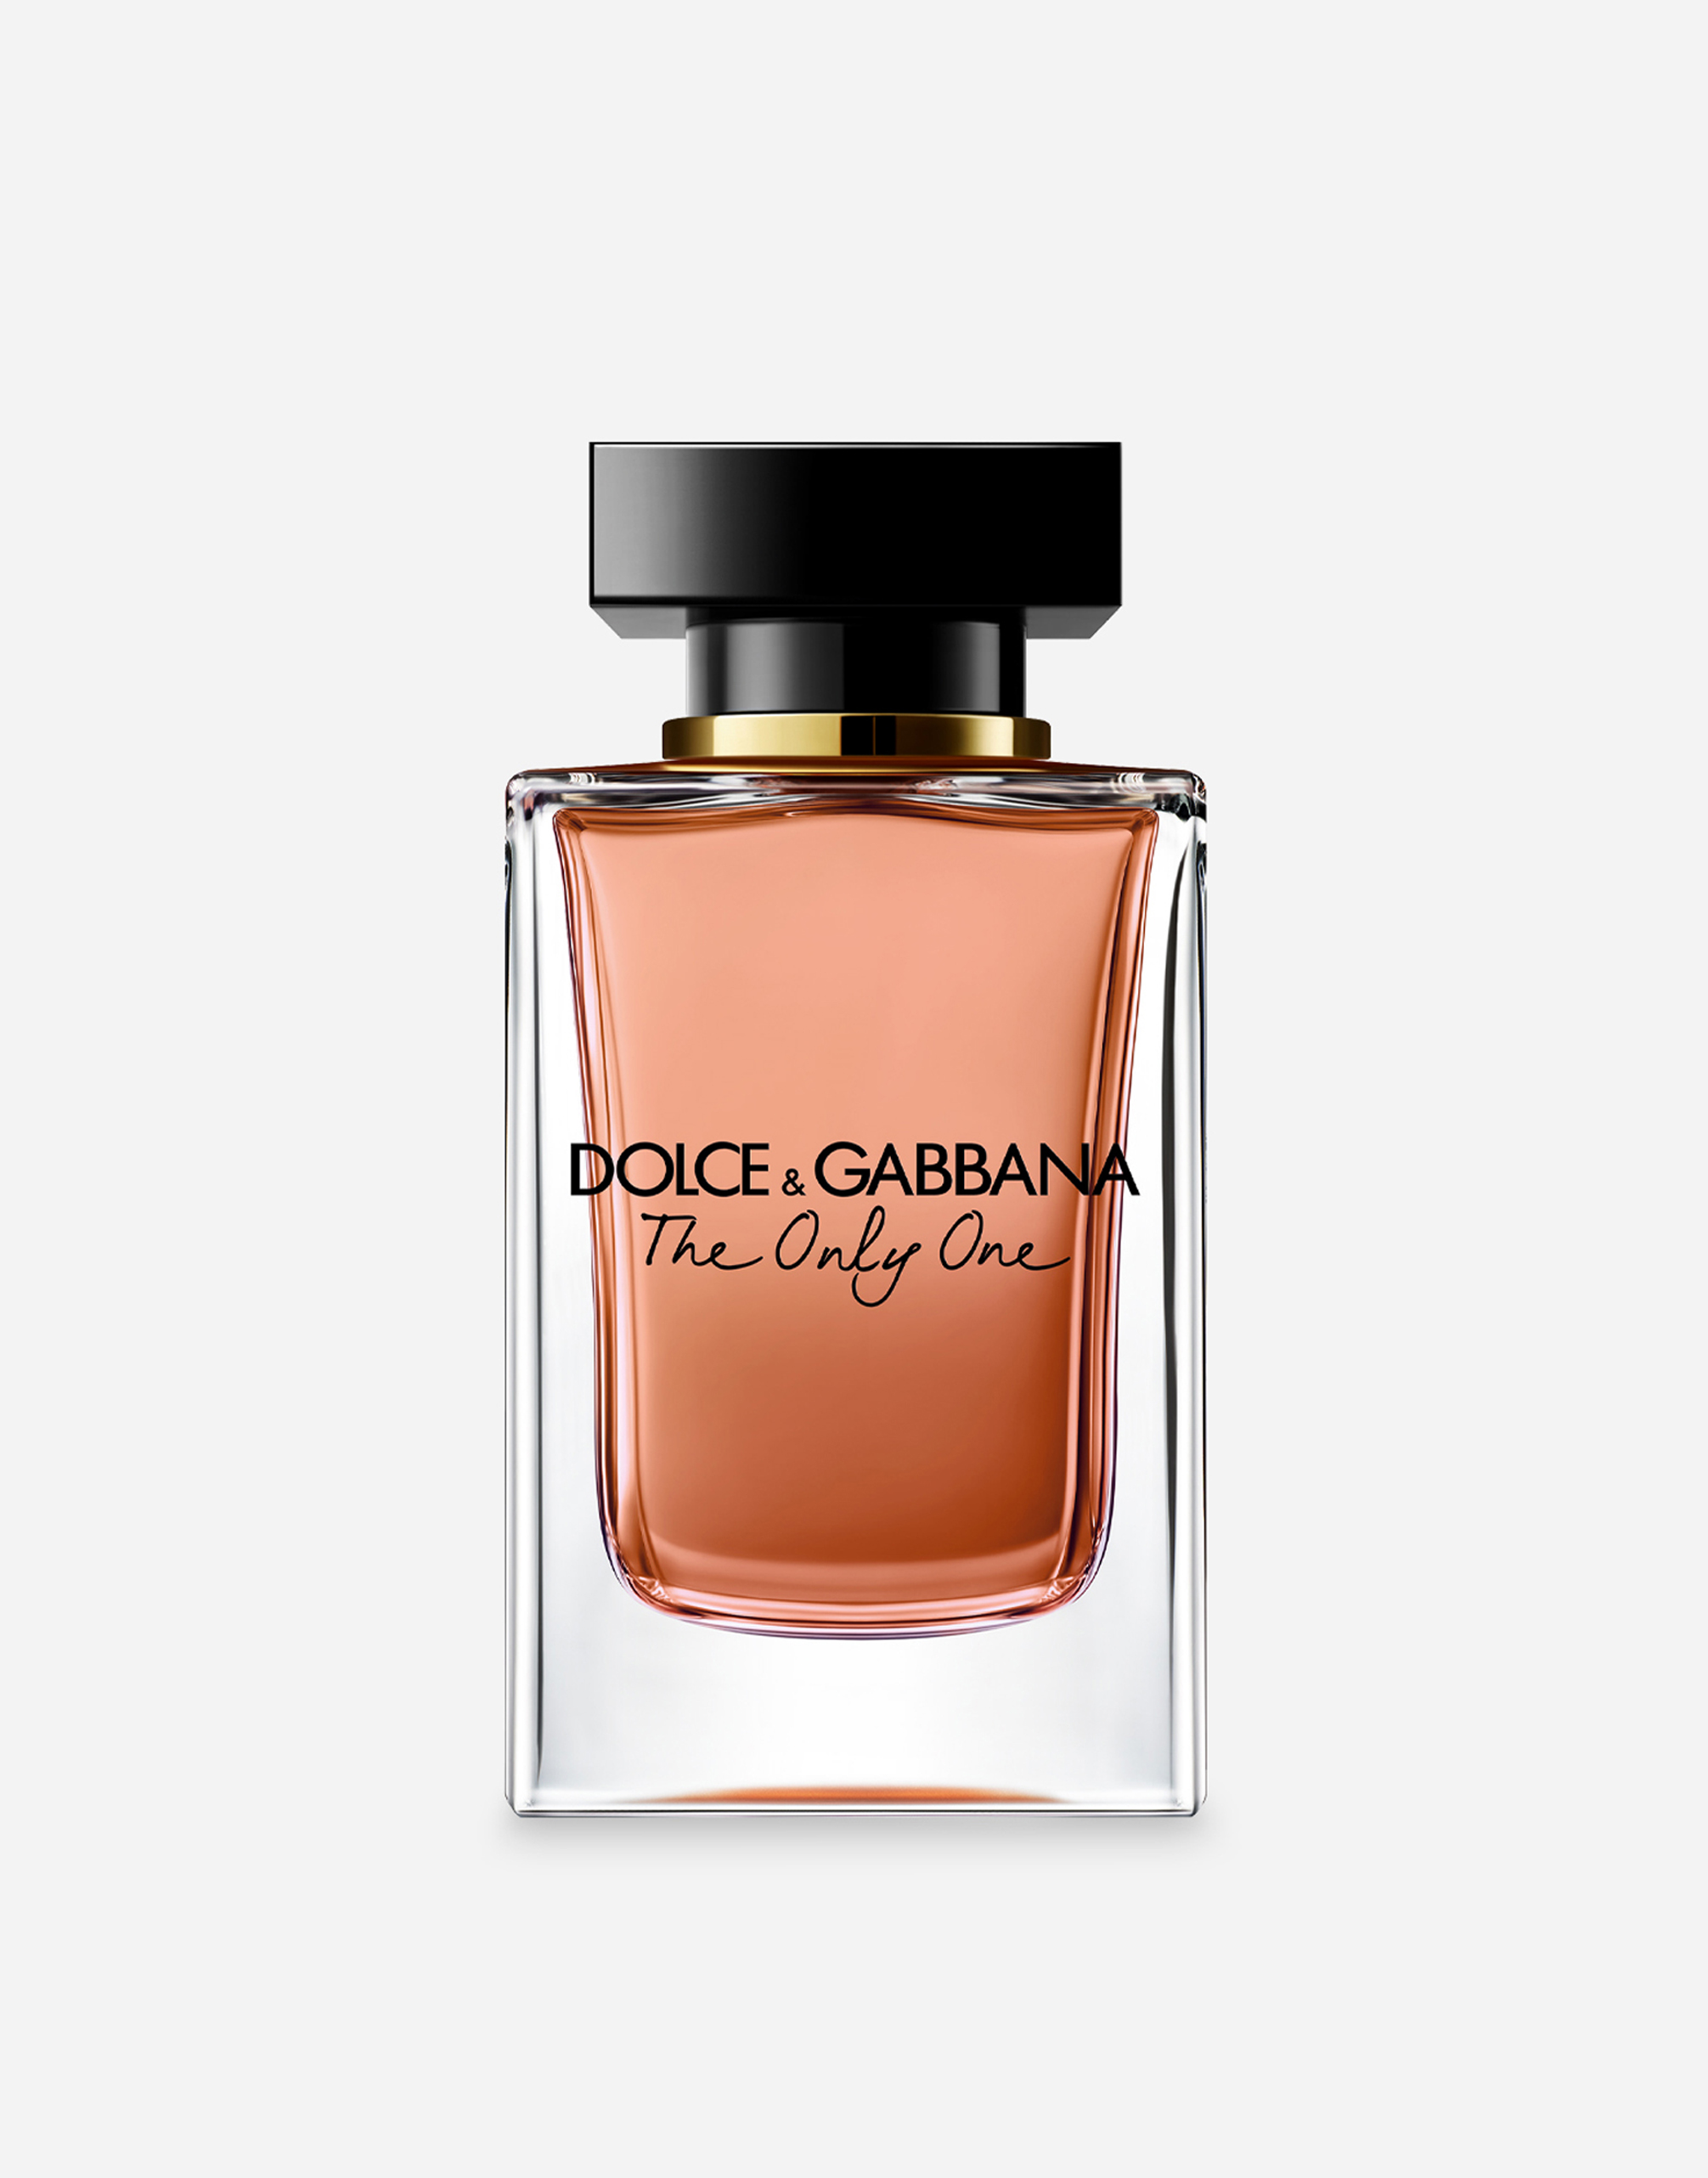 The Only One Eau de Parfum for Women by Dolce&Gabbana Beauty